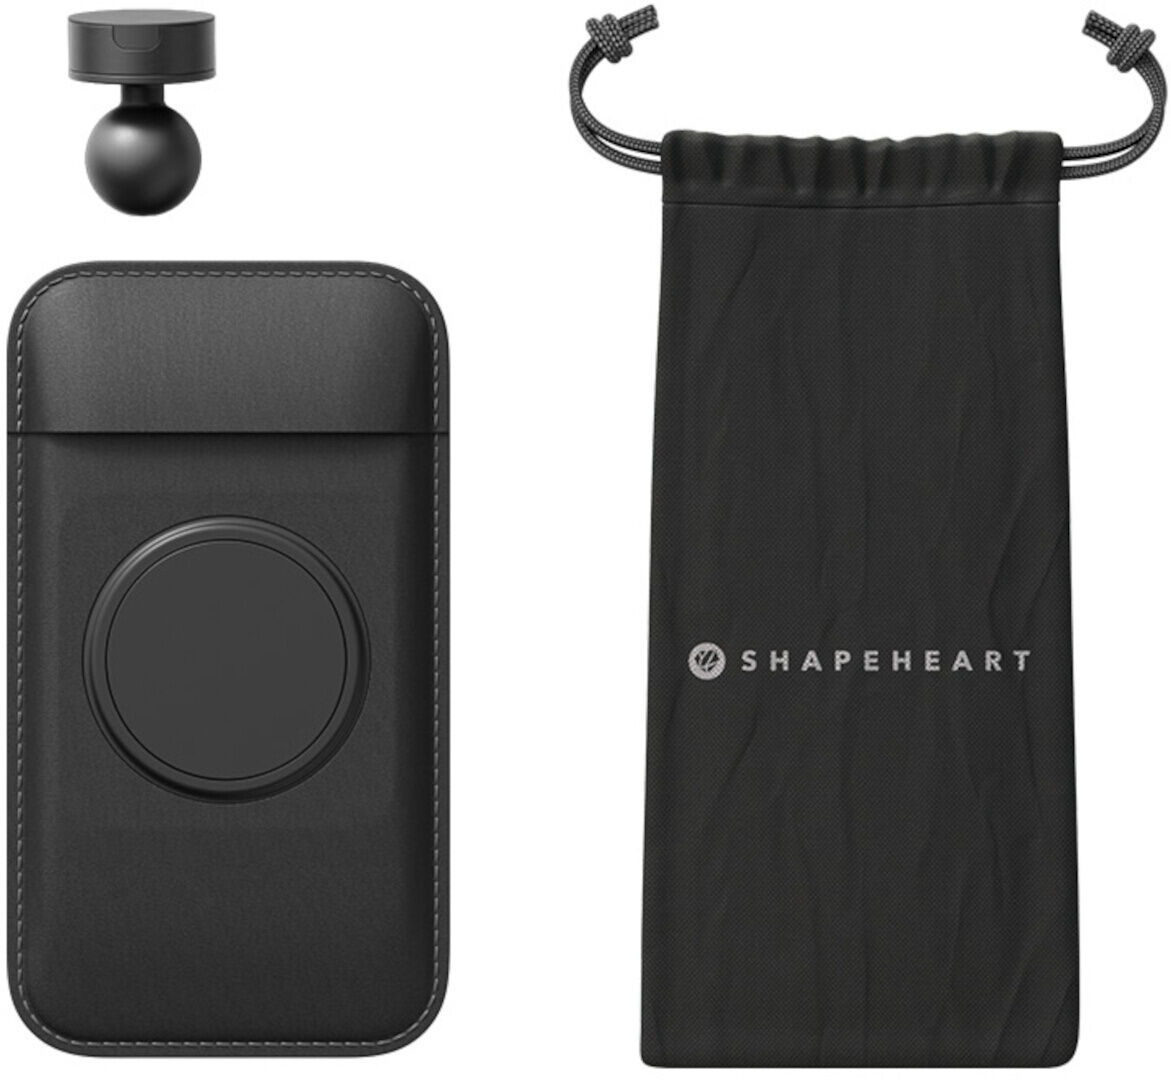 Shapeheart Ball Bundle Soporte magnético para smartphone para adaptador esférico universal - Negro (M)